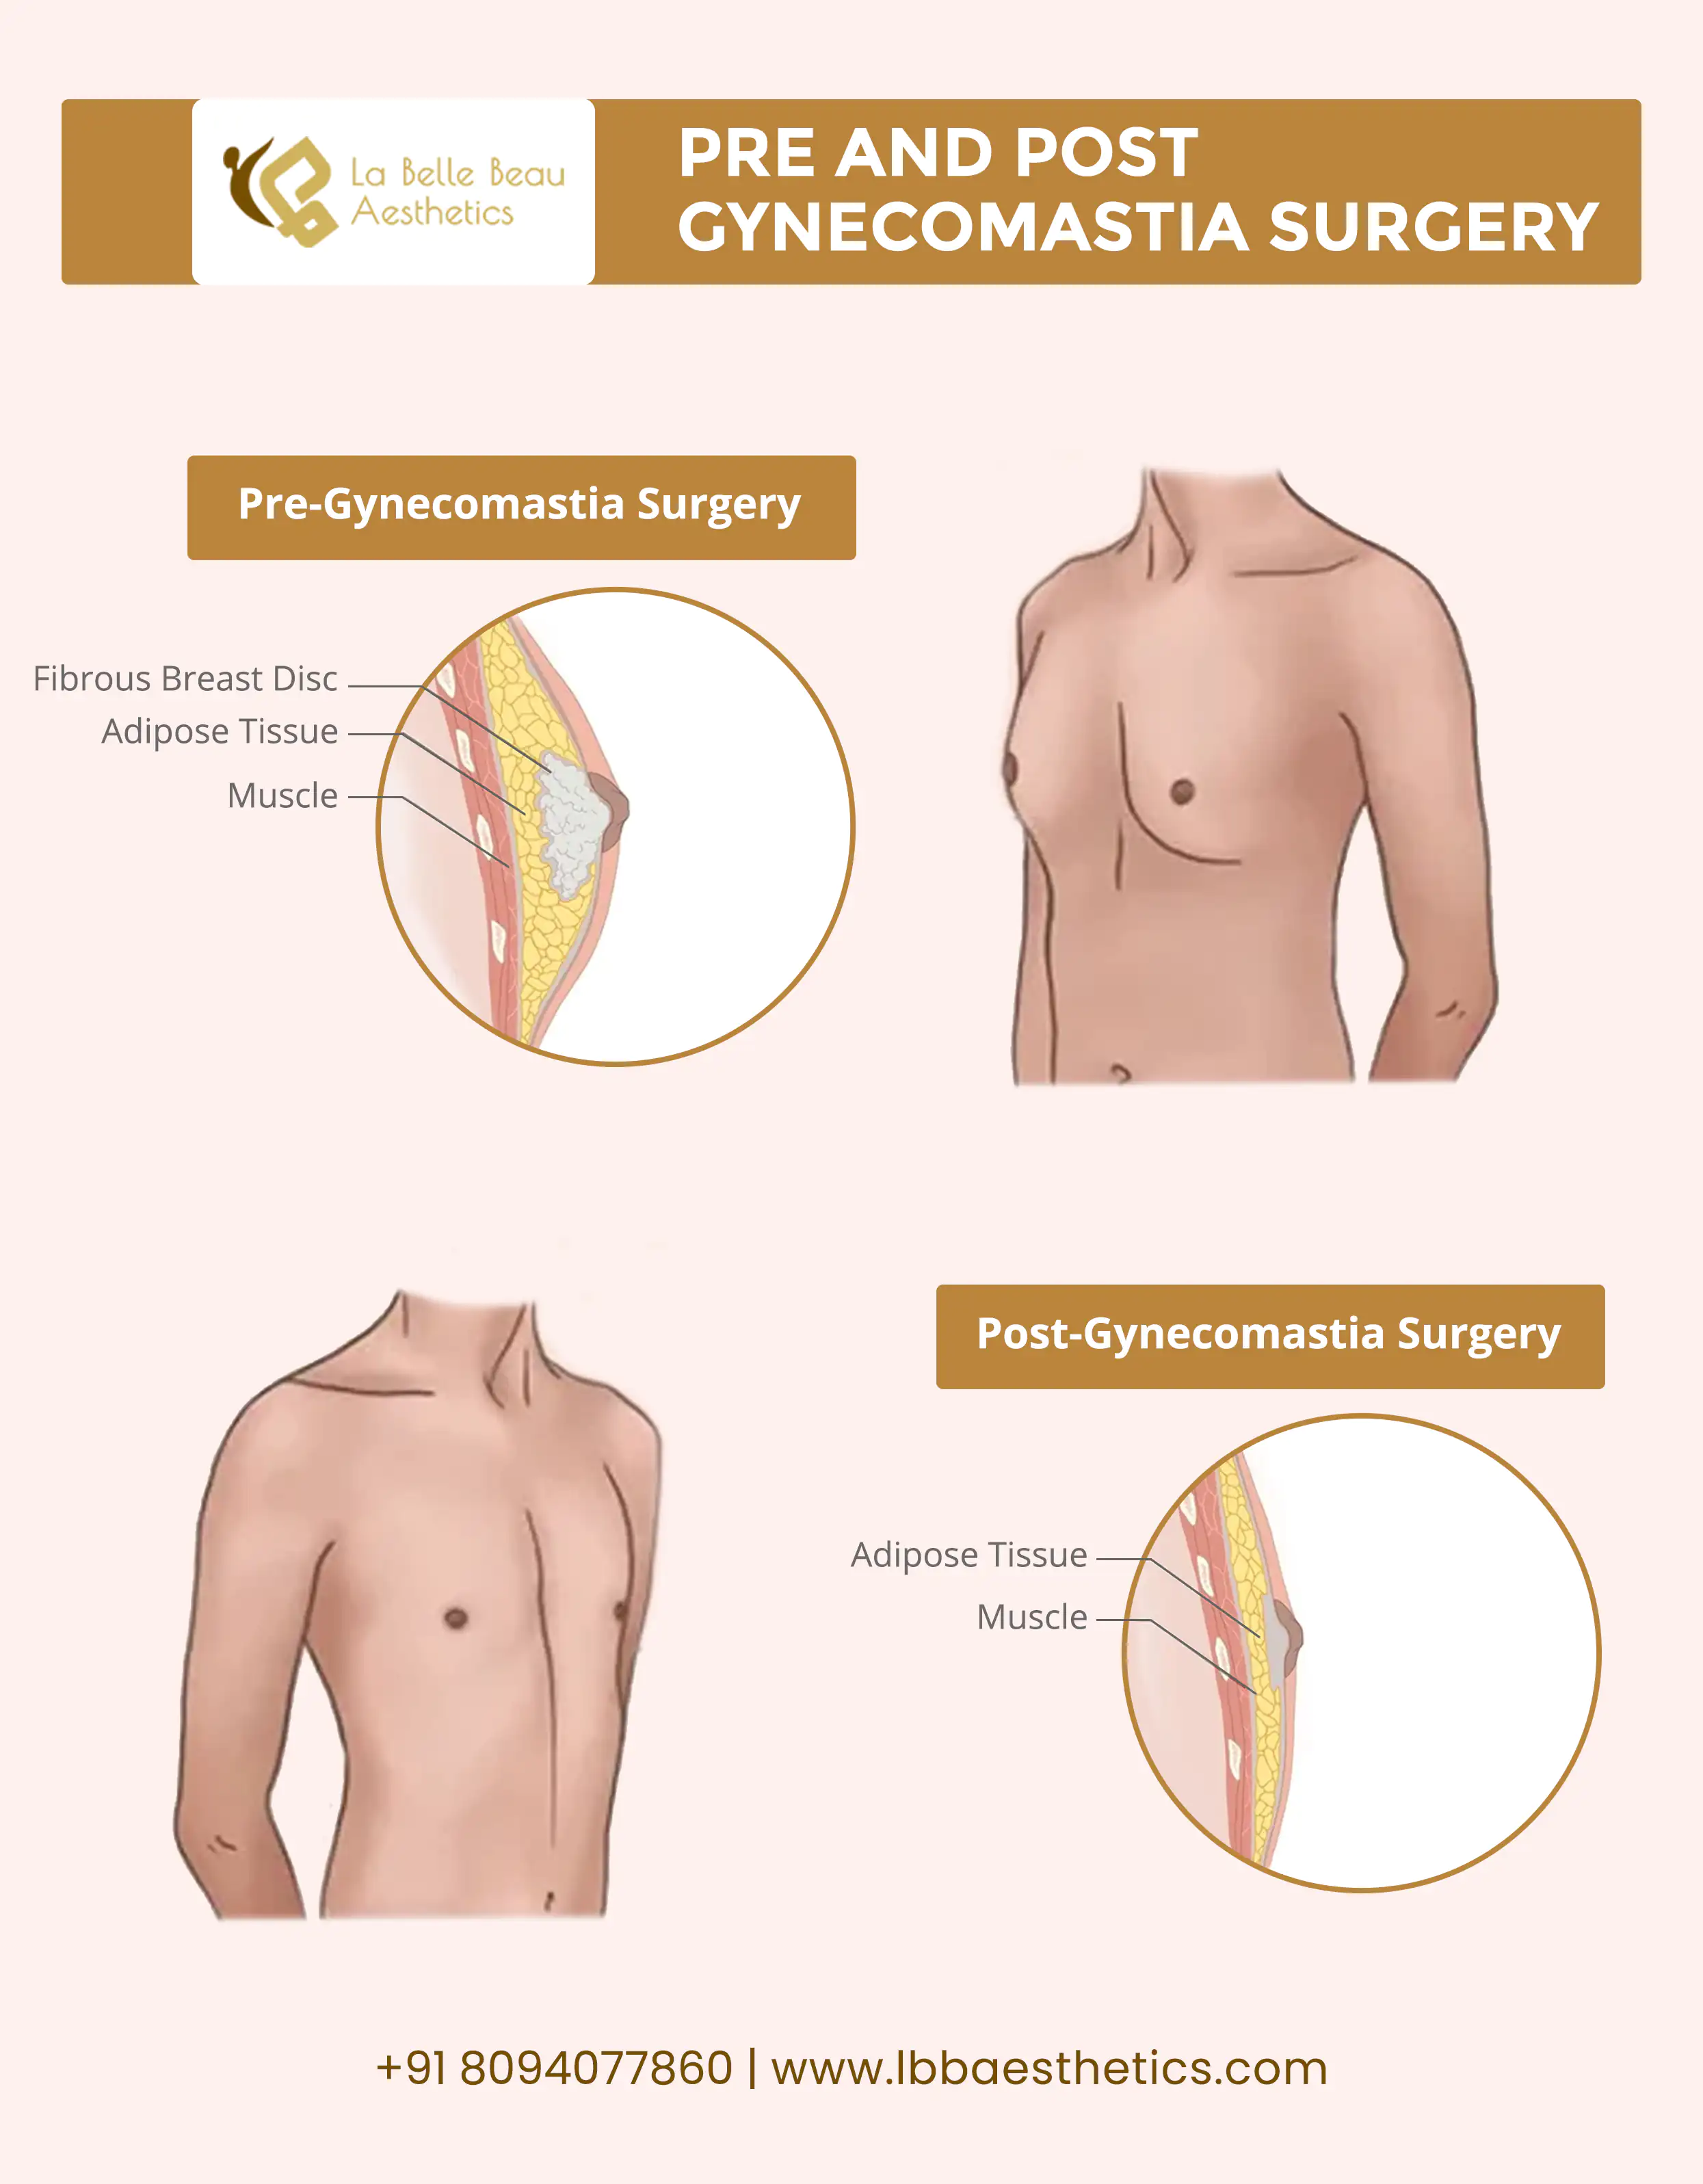 Gynecomastia Things Consider Opting Gynaecomastia Surgery